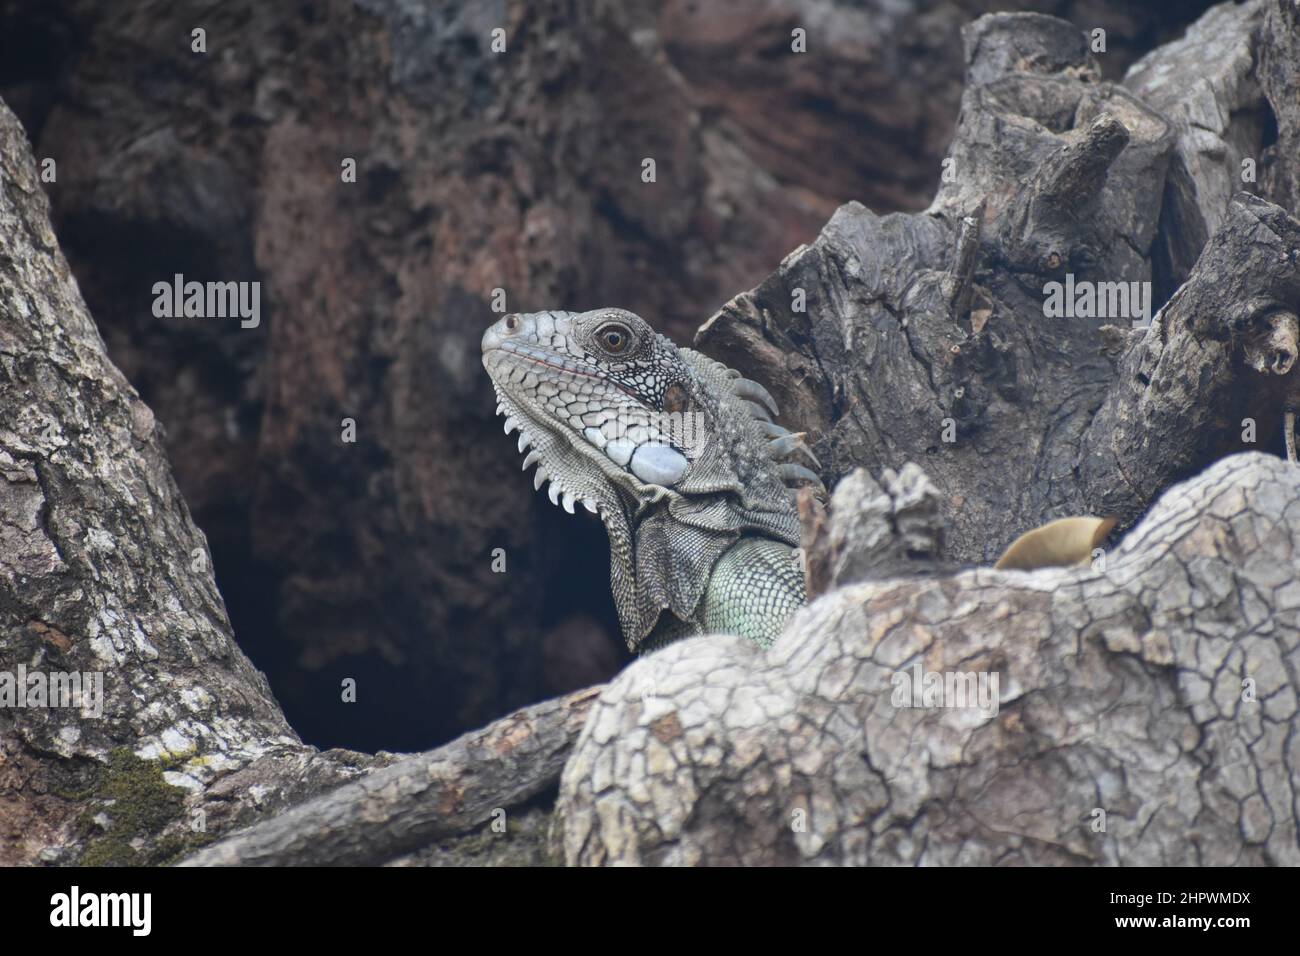 Iguana on a samaan tree bark in St. Augustine, Trinidad Stock Photo